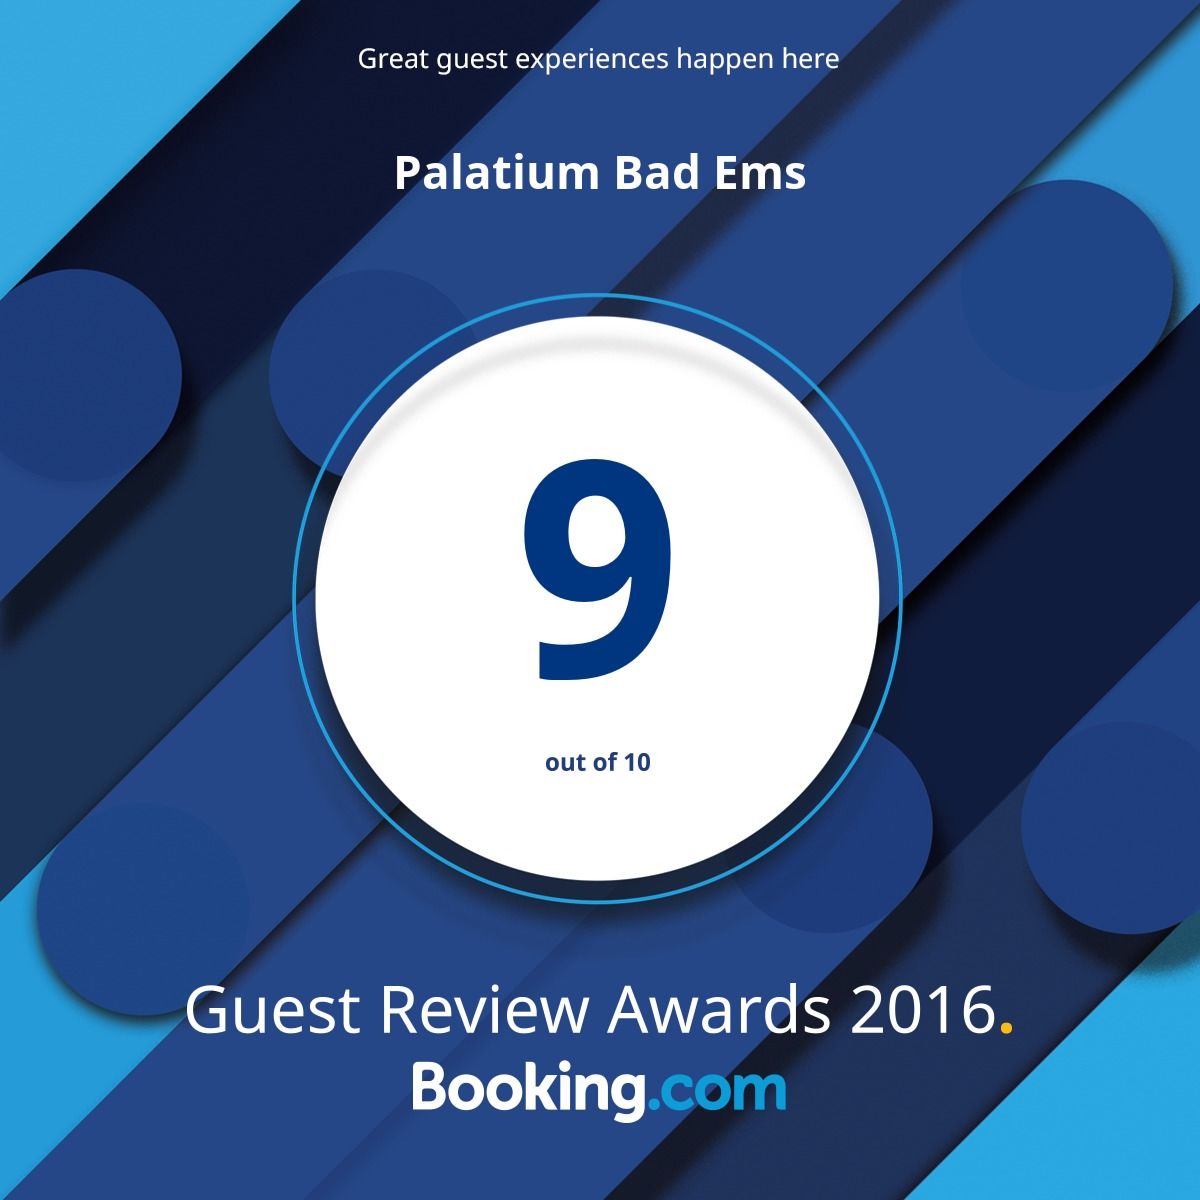 Award booking.com 2016